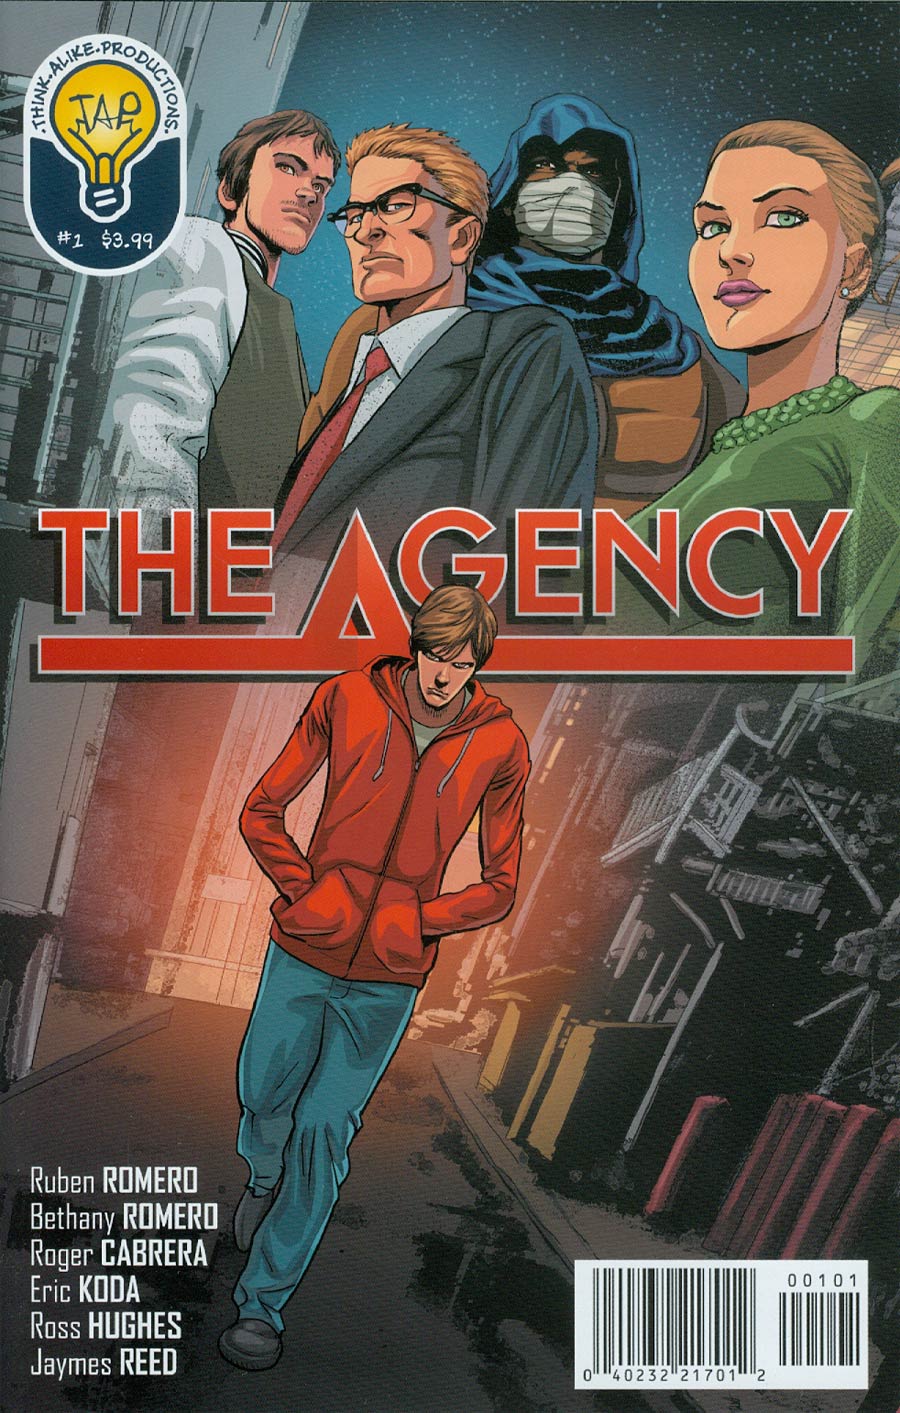 Agency (Think Alike) #1